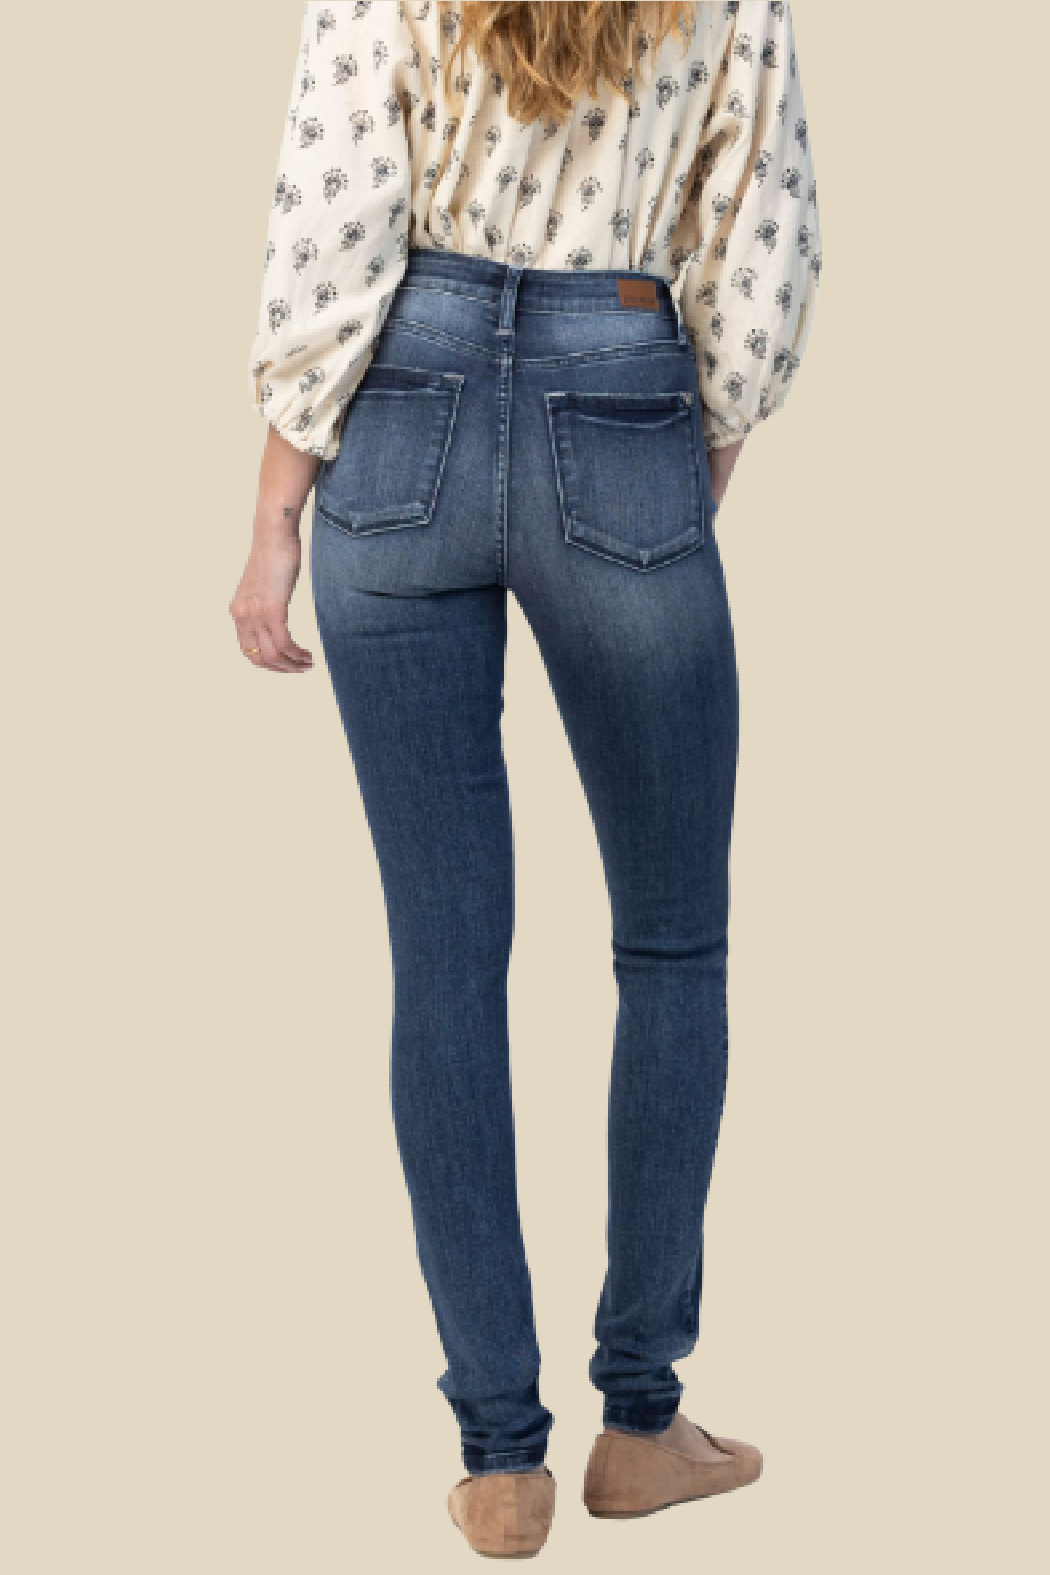 Long Inseam Skinny Jean